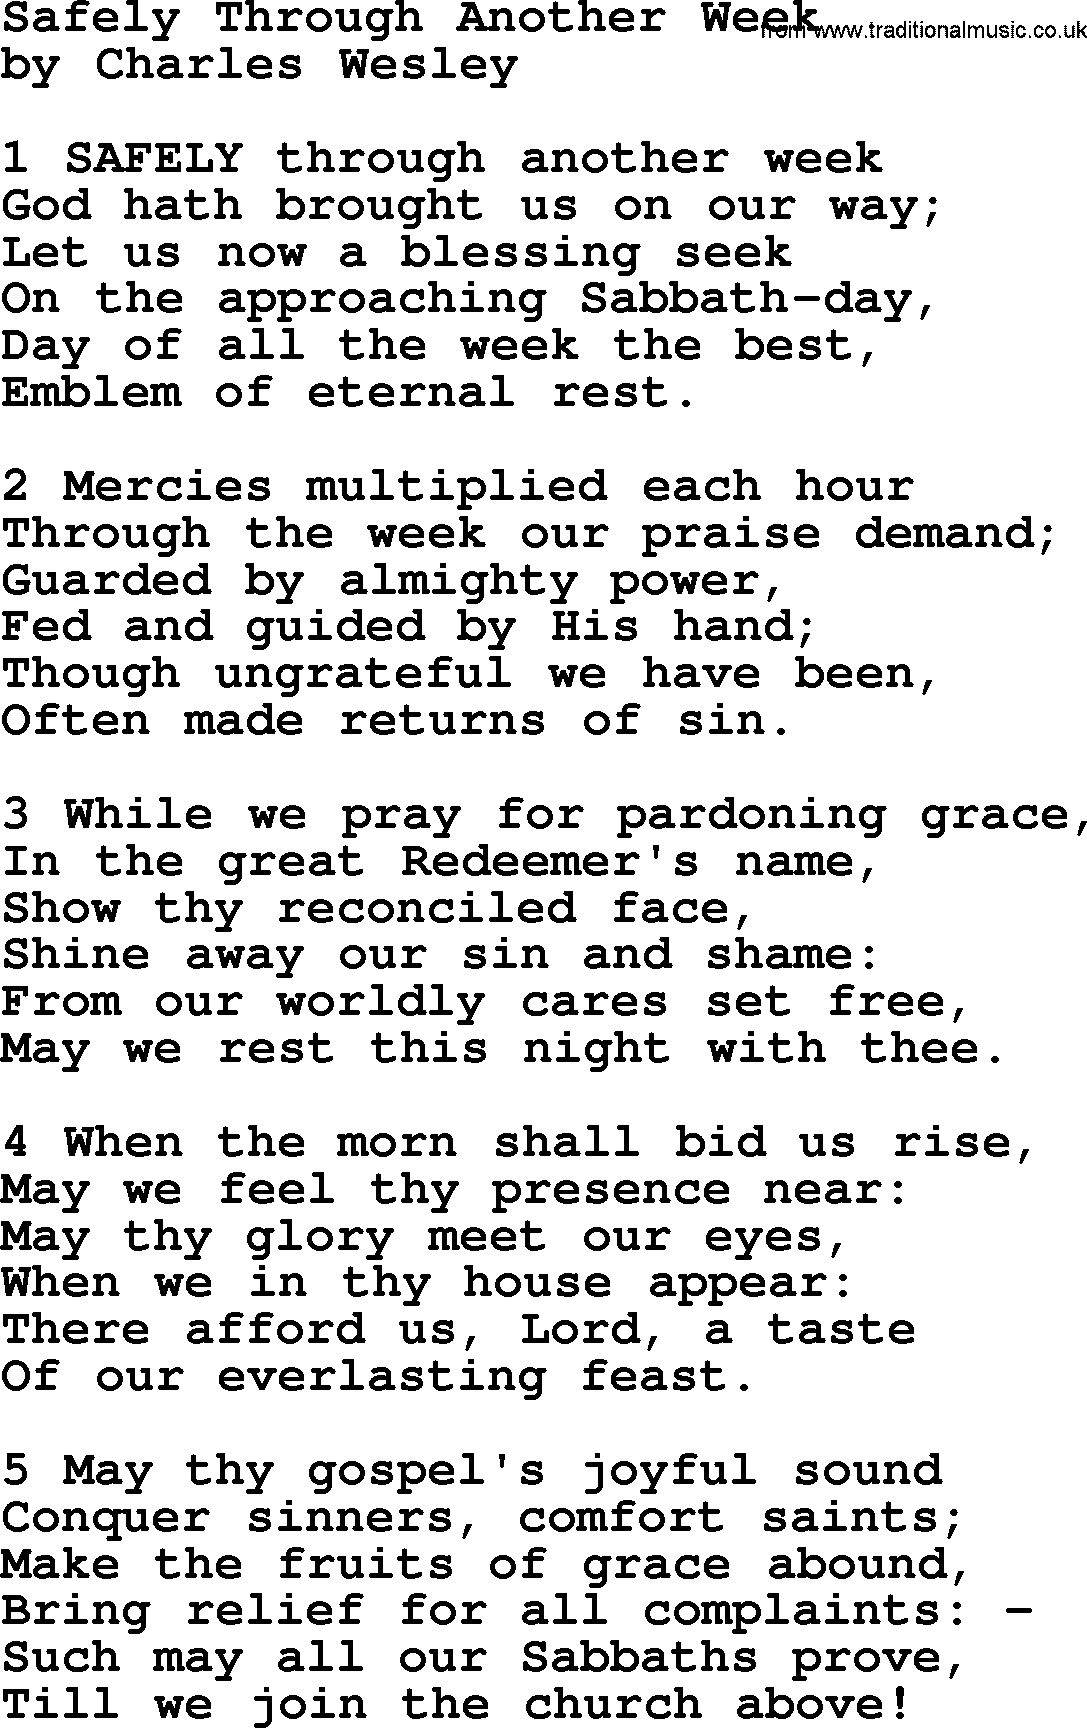 Charles Wesley hymn: Safely Through Another Week, lyrics